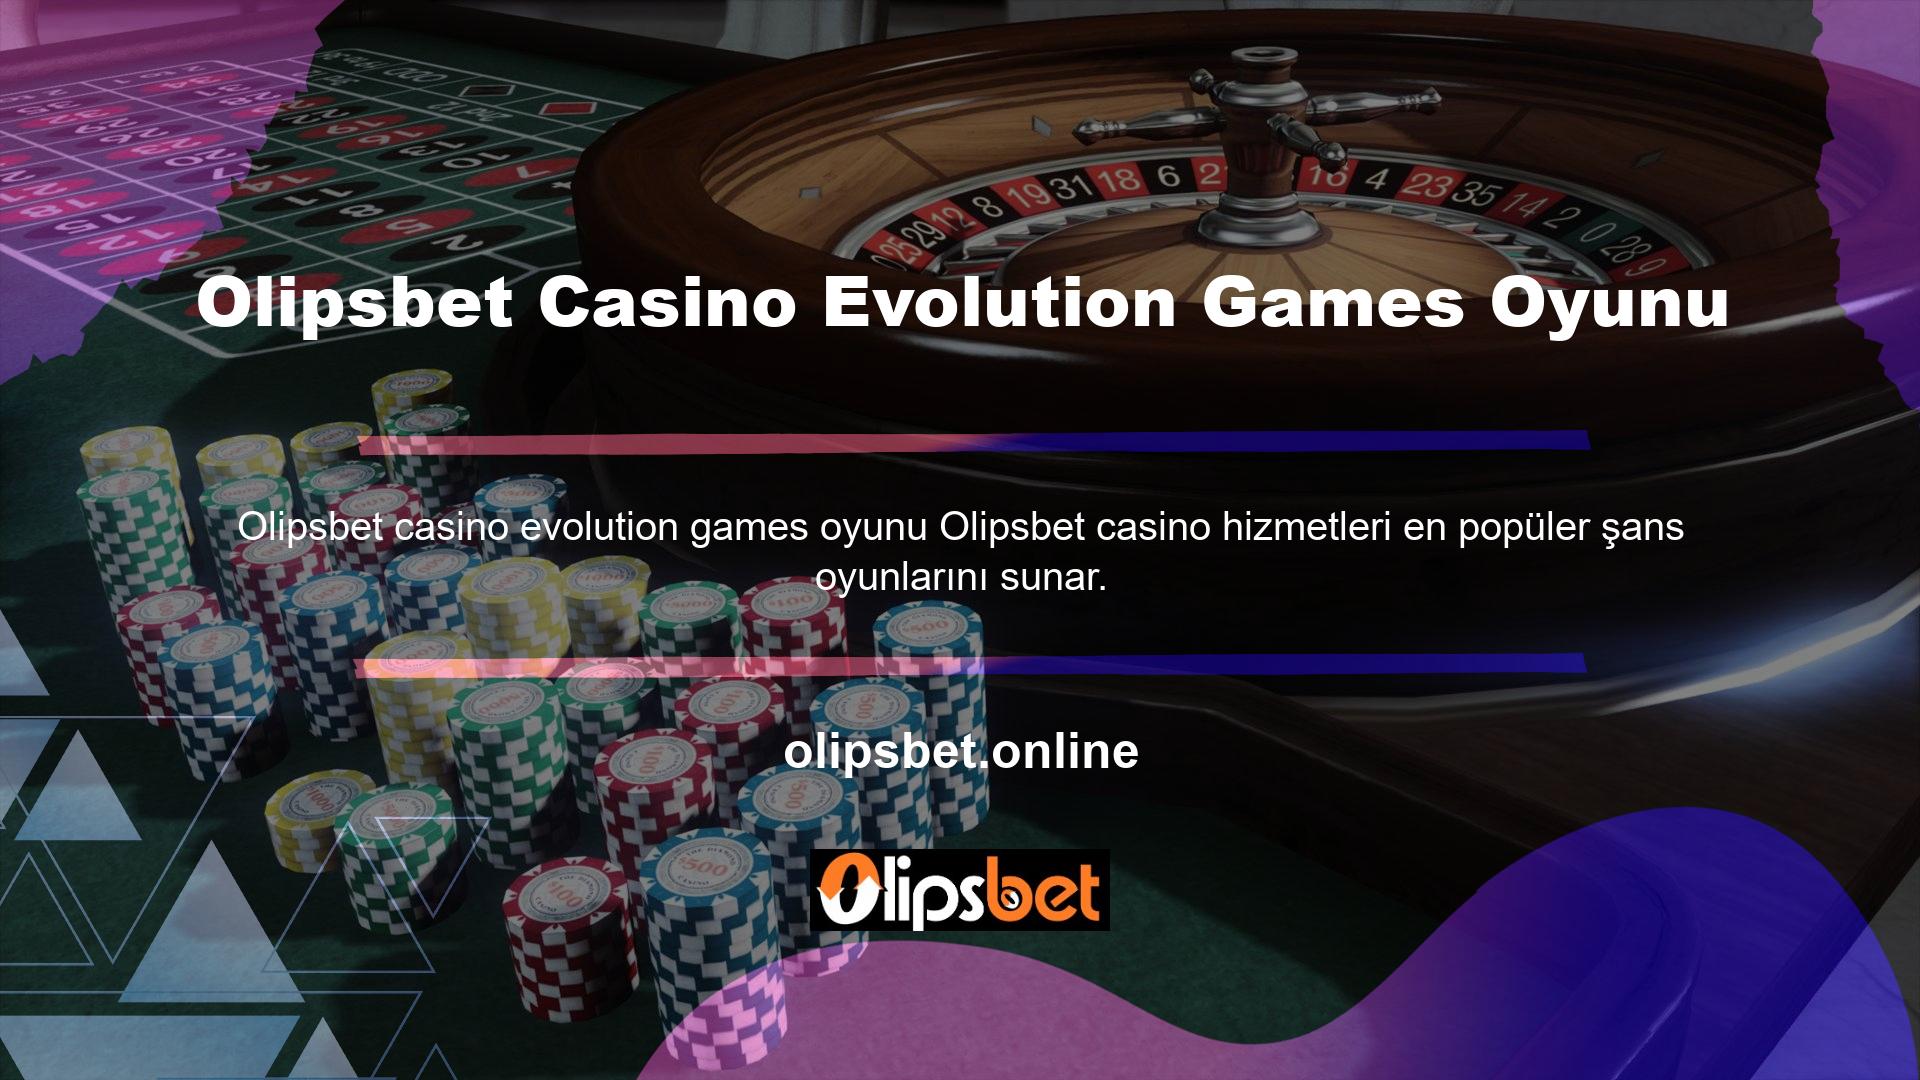 Olipsbet casino evolution games oyunu